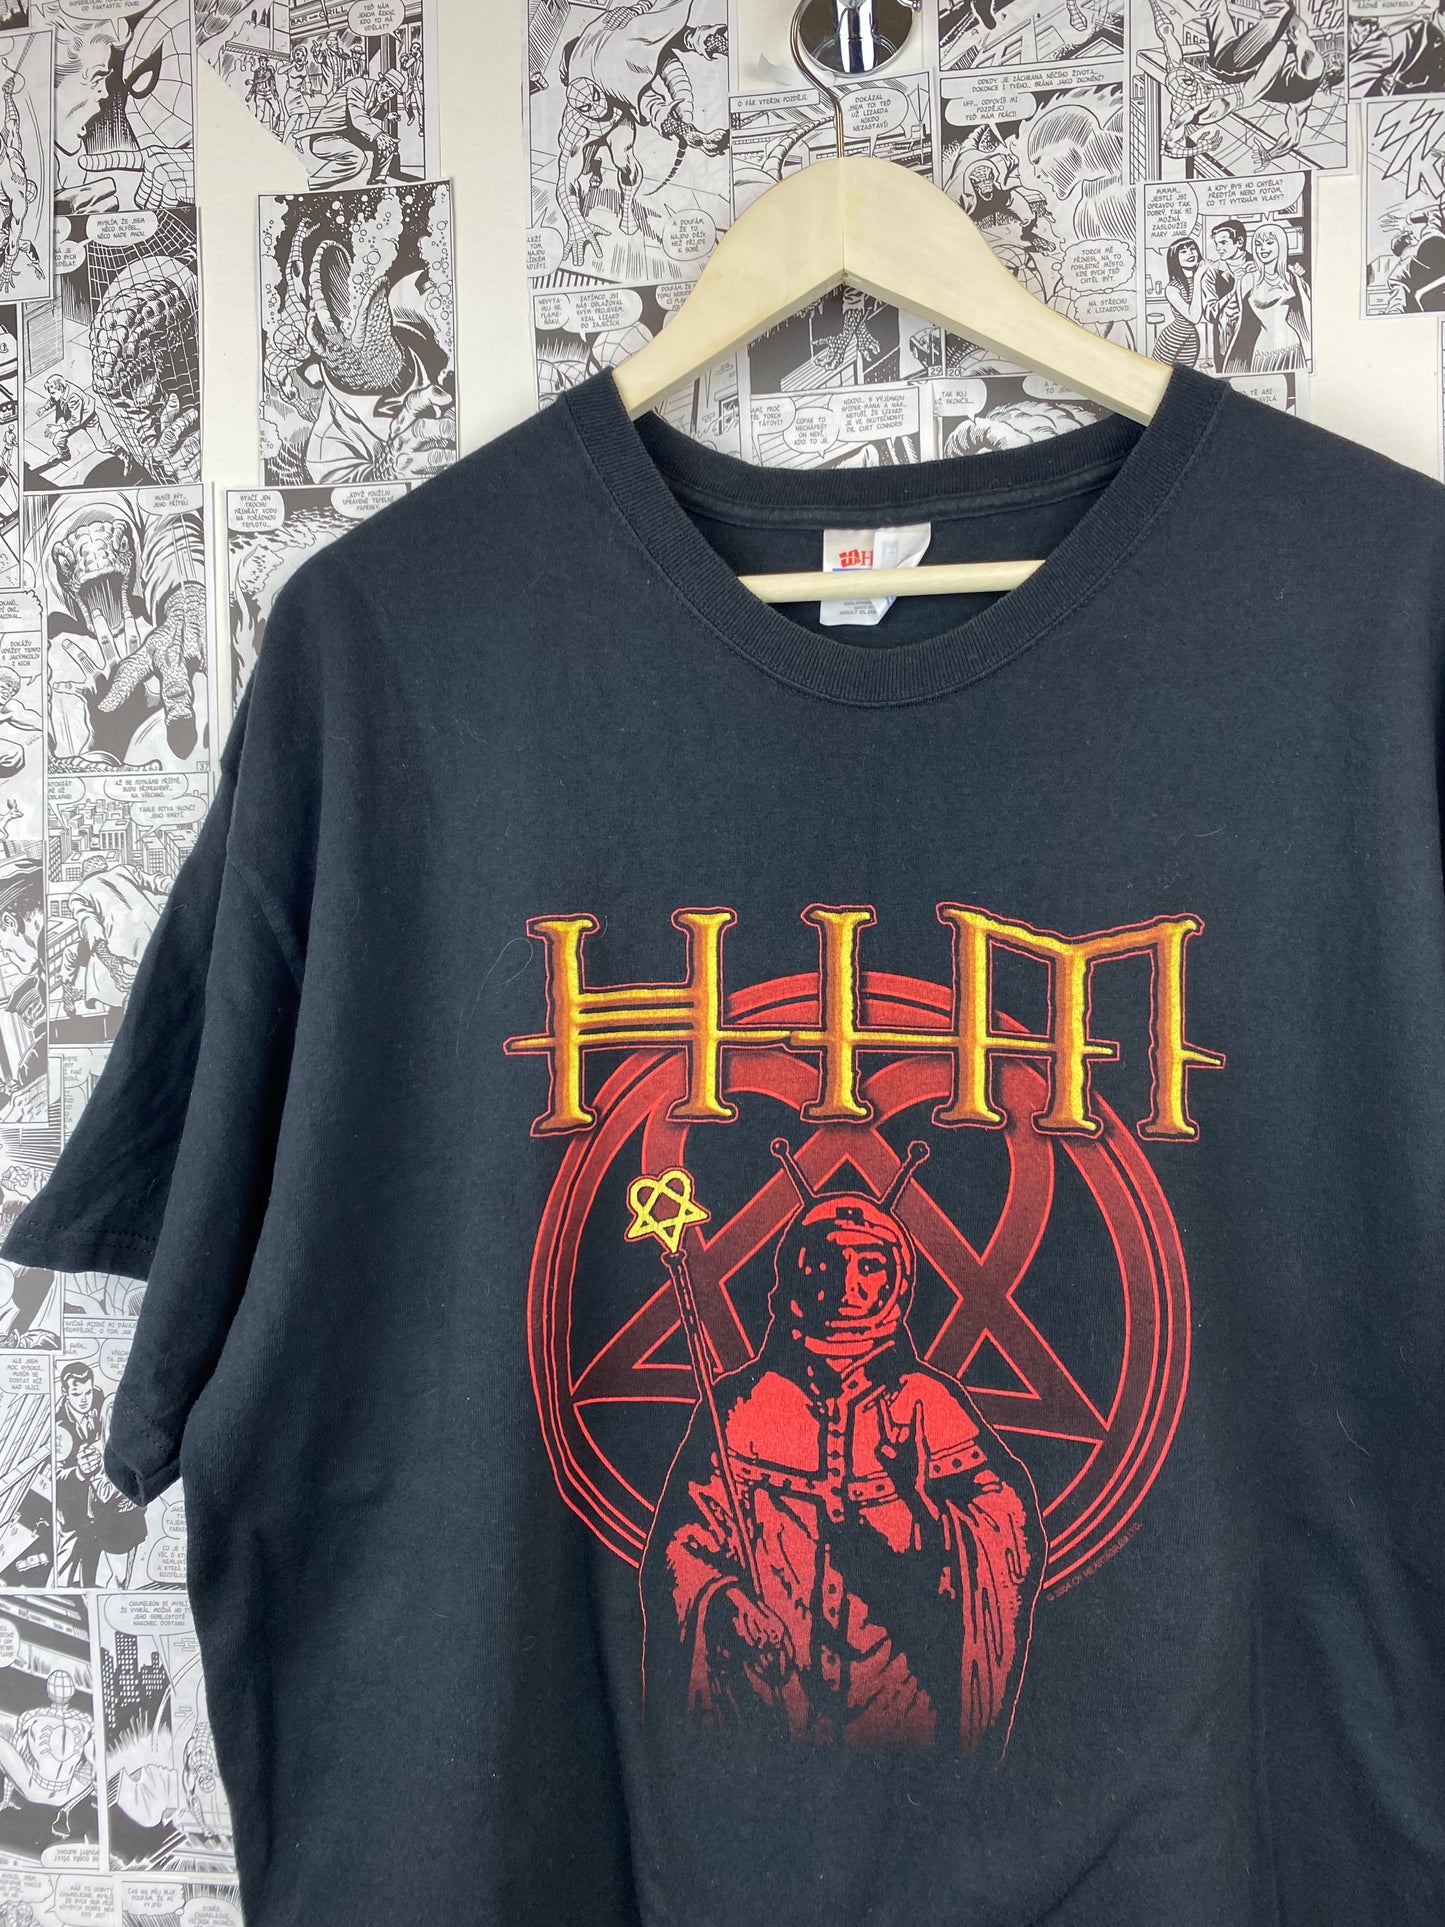 Vintage HIM “Heartagram” t-shirt - size XL